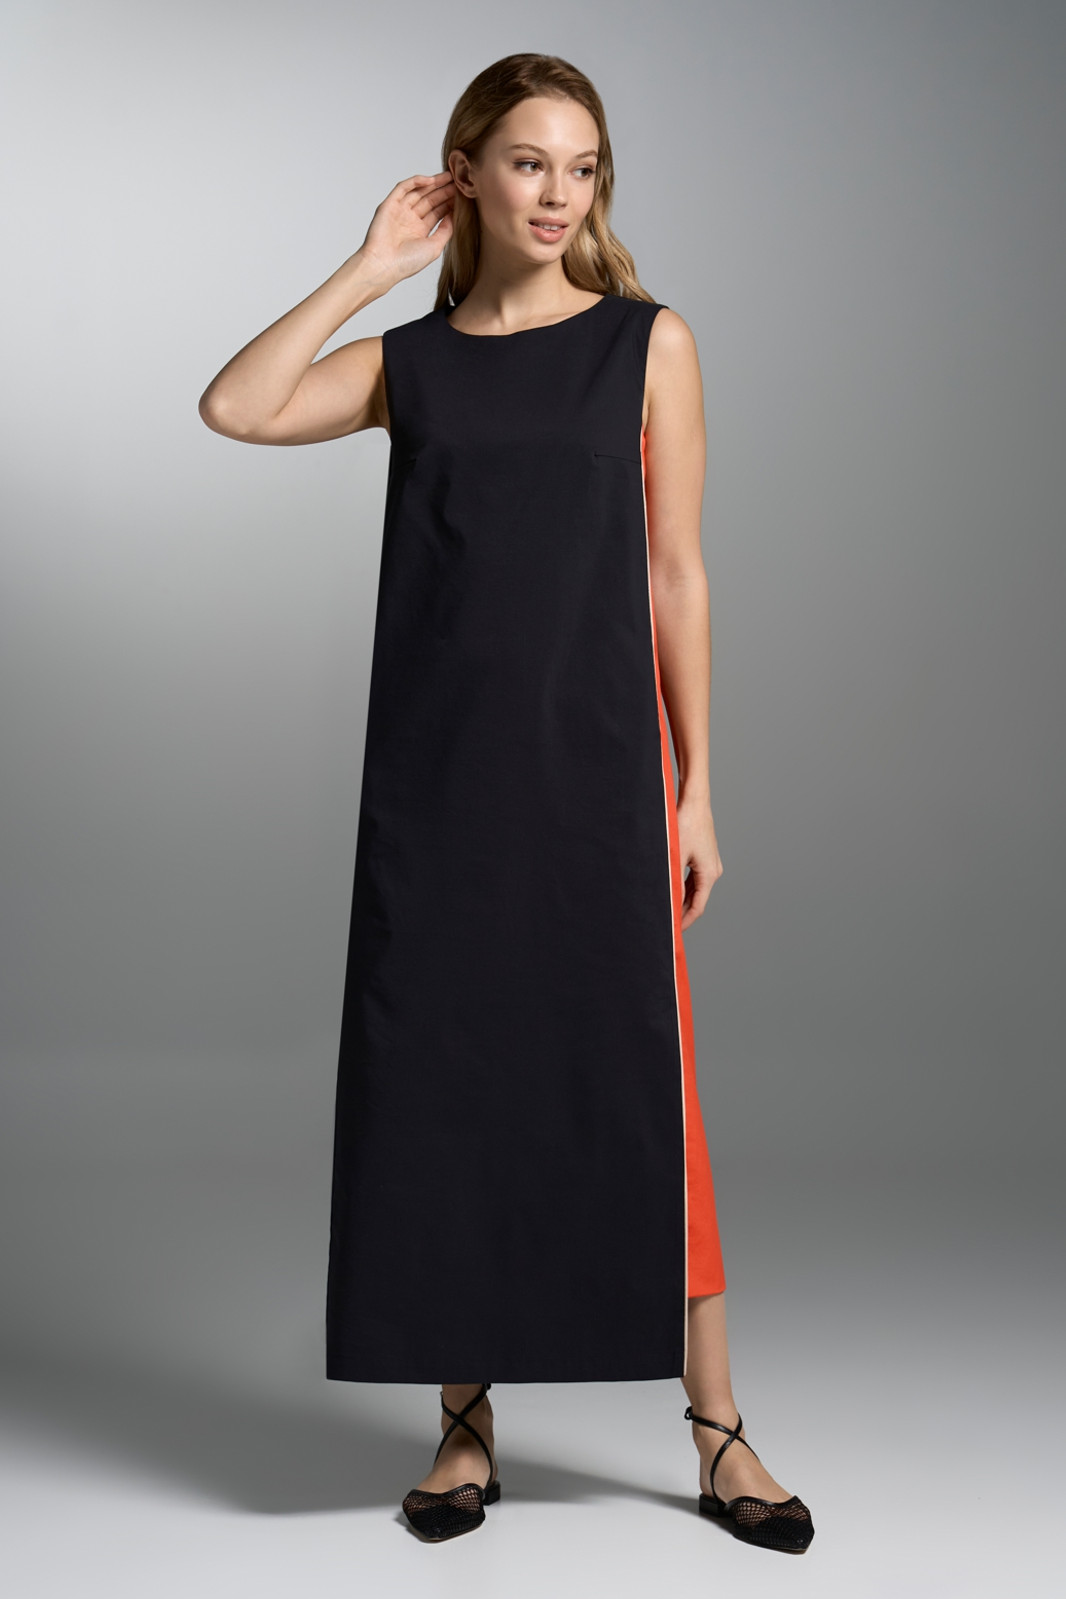 Платье Vi oro VR-1002 черный, оранжевый